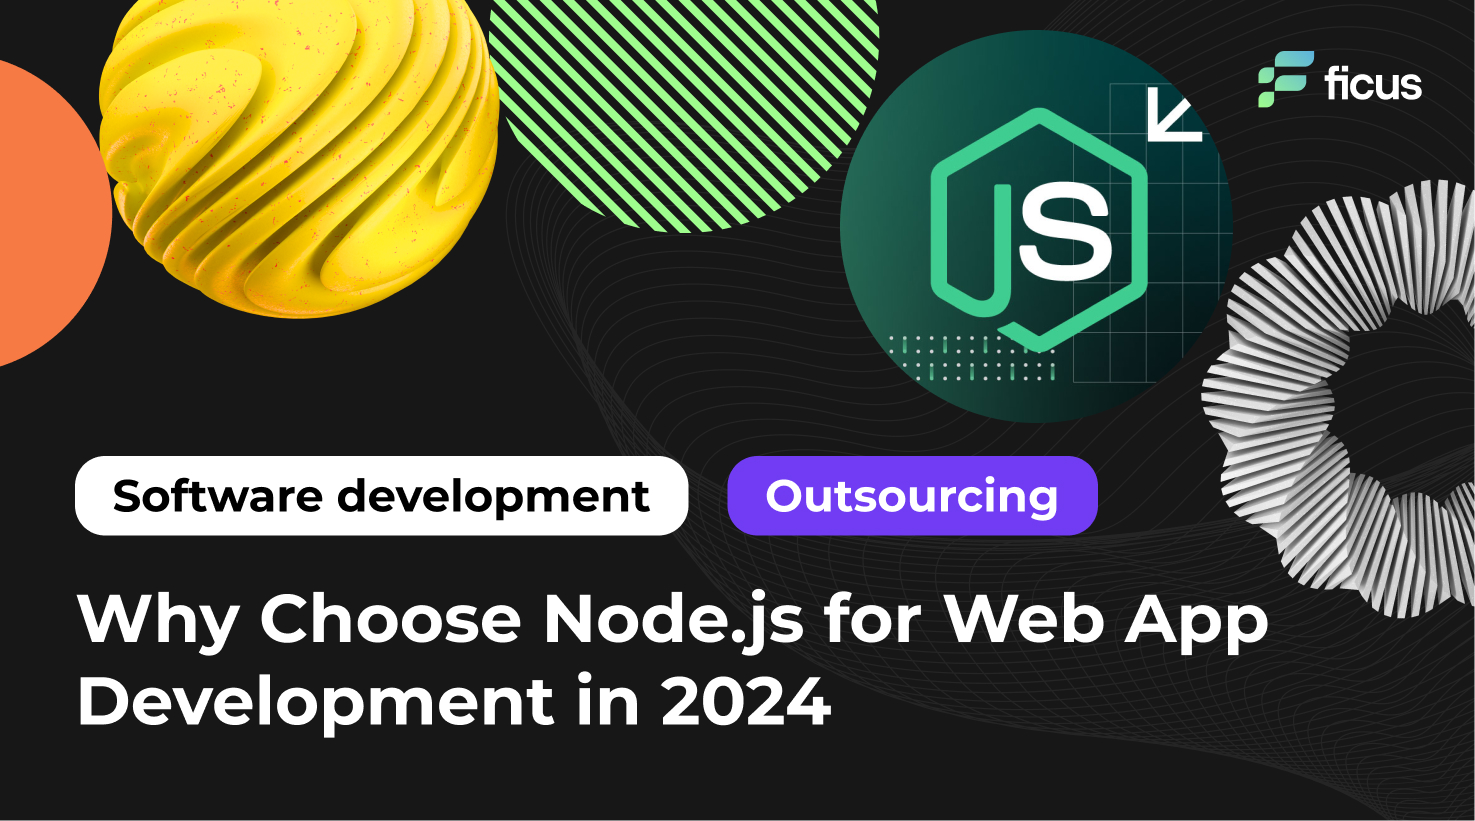 _Why Choose Node.js for Web App Development in 2024